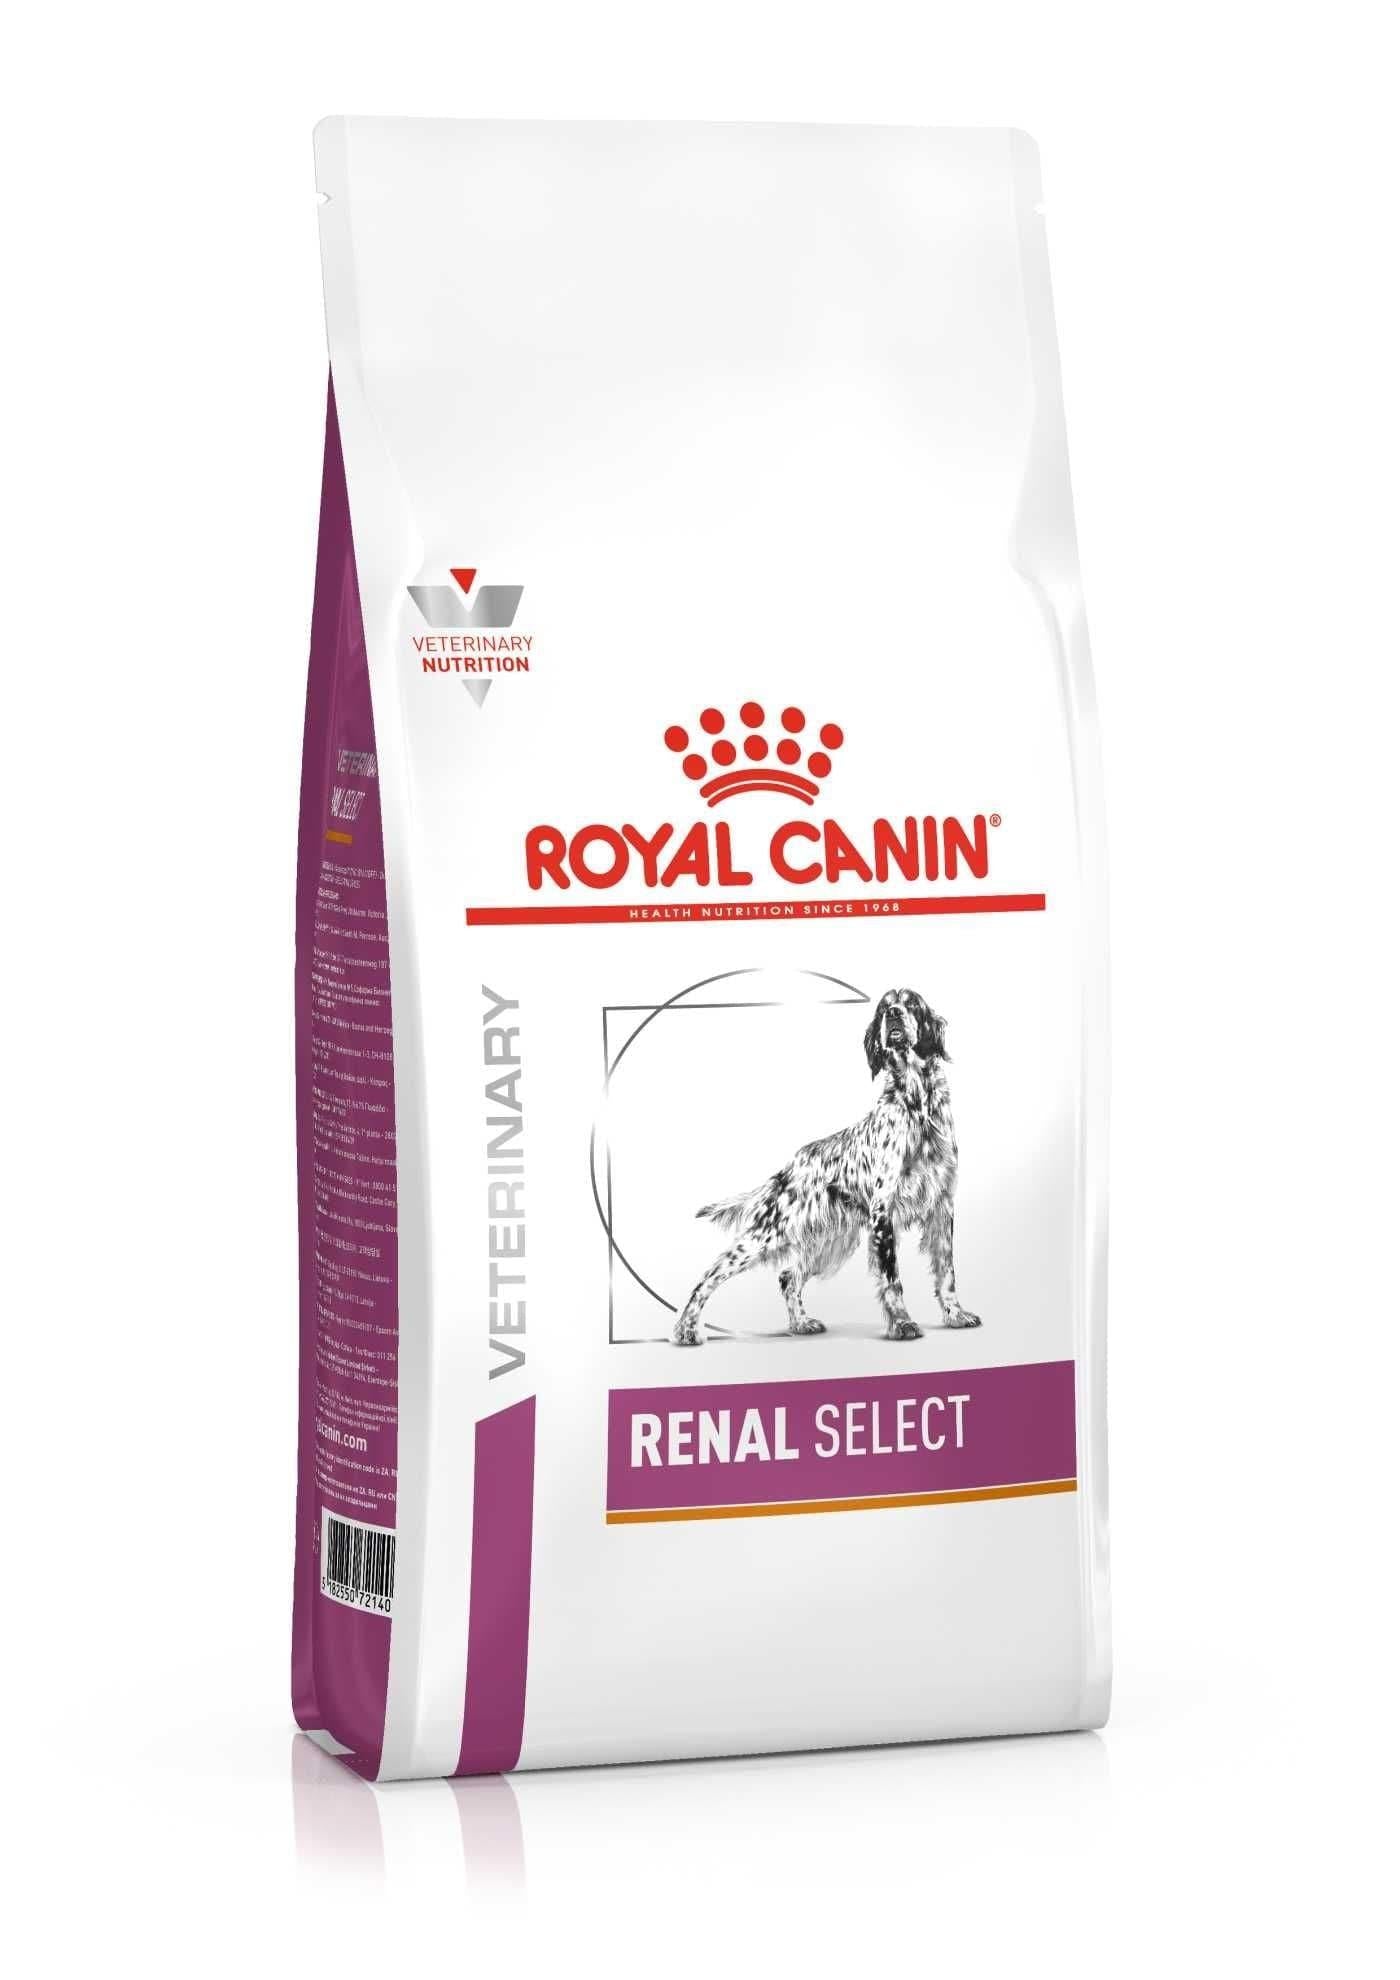 Renal Select Dog - Royal Canin Veterinary Diet - Alter:Adult, Alter:Senior, Erkrankung:Magen-Darm, Erkrankung:Niere, Futterart:Trocken, Geschmack:Huhn, Tierart:Hund - Marigin AG Onlineshop für Tierbedarf